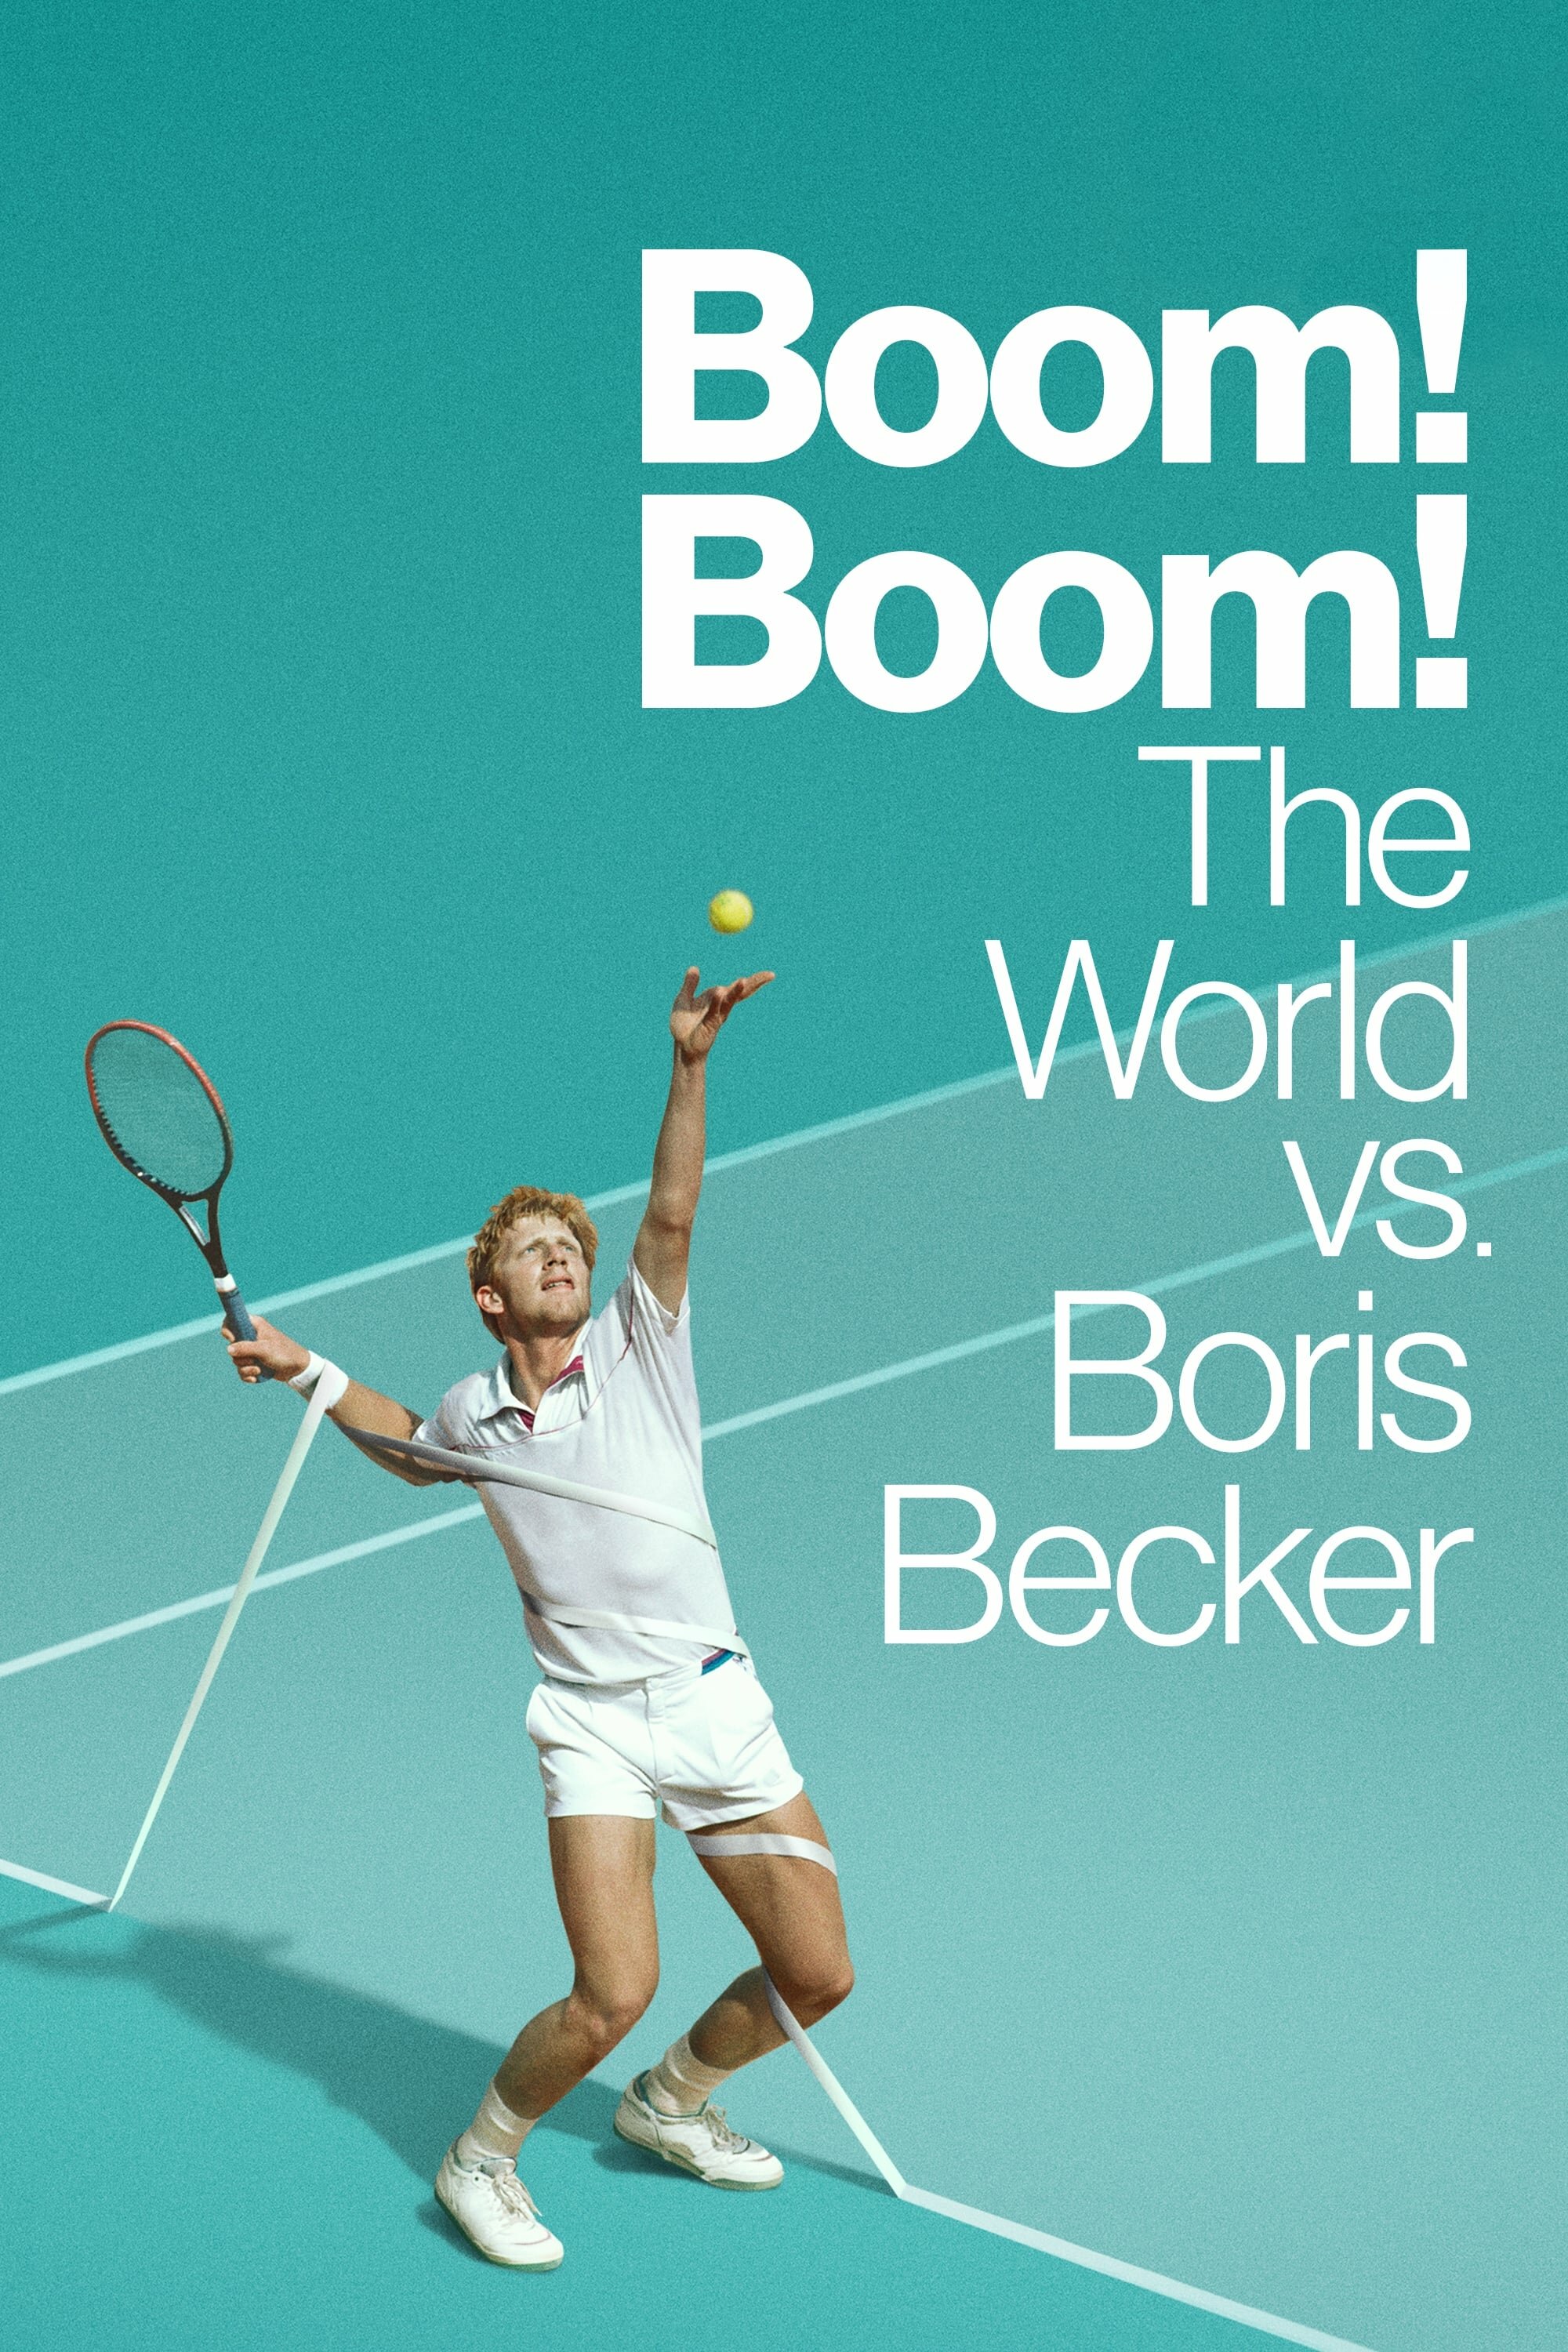 Boom! Boom! The World vs. Boris Becker ne zaman